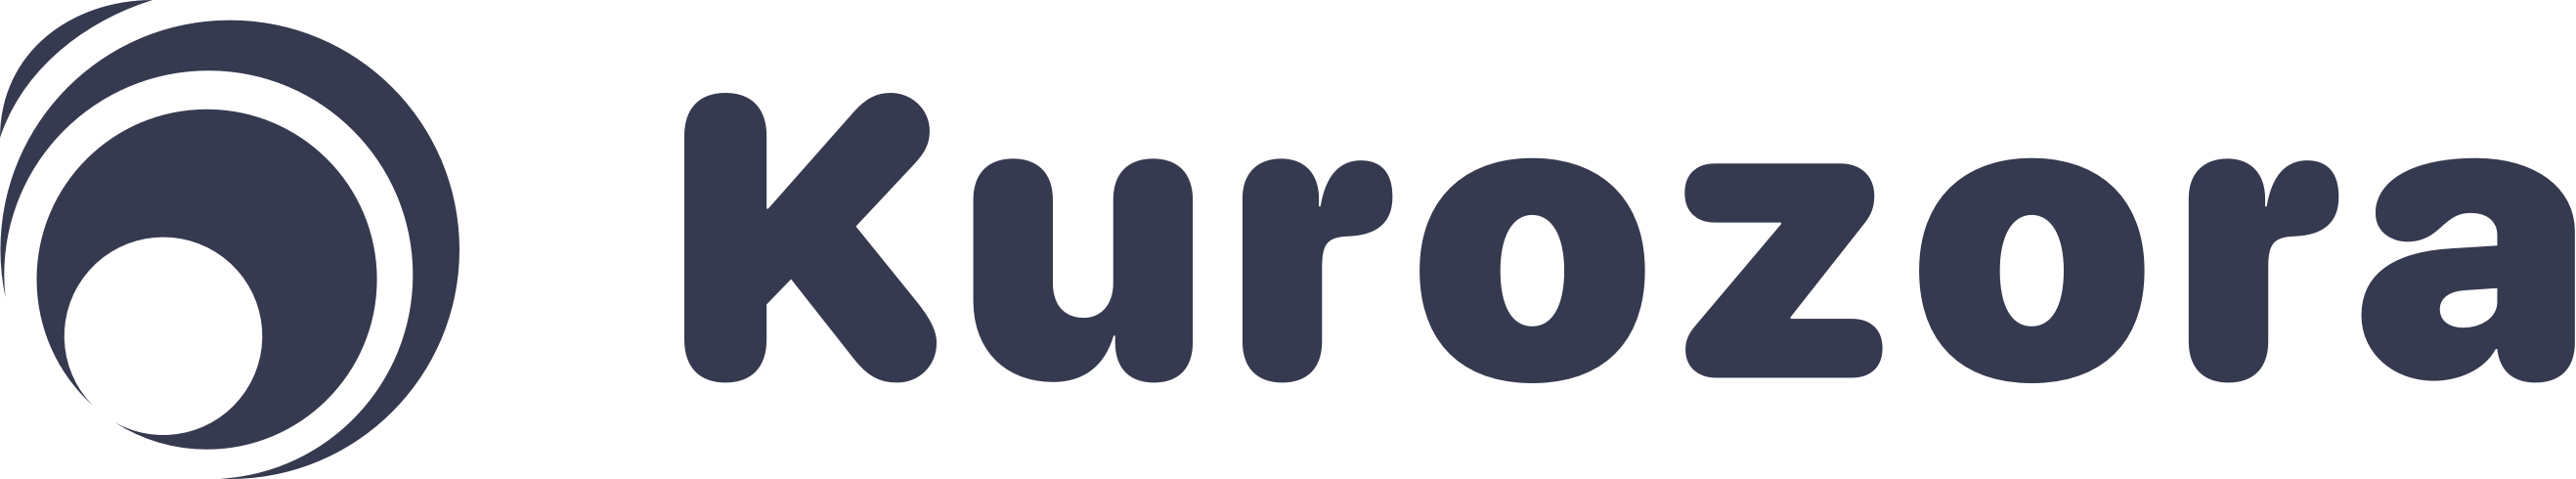 Kurozora full logo blueberry RGB monochrome